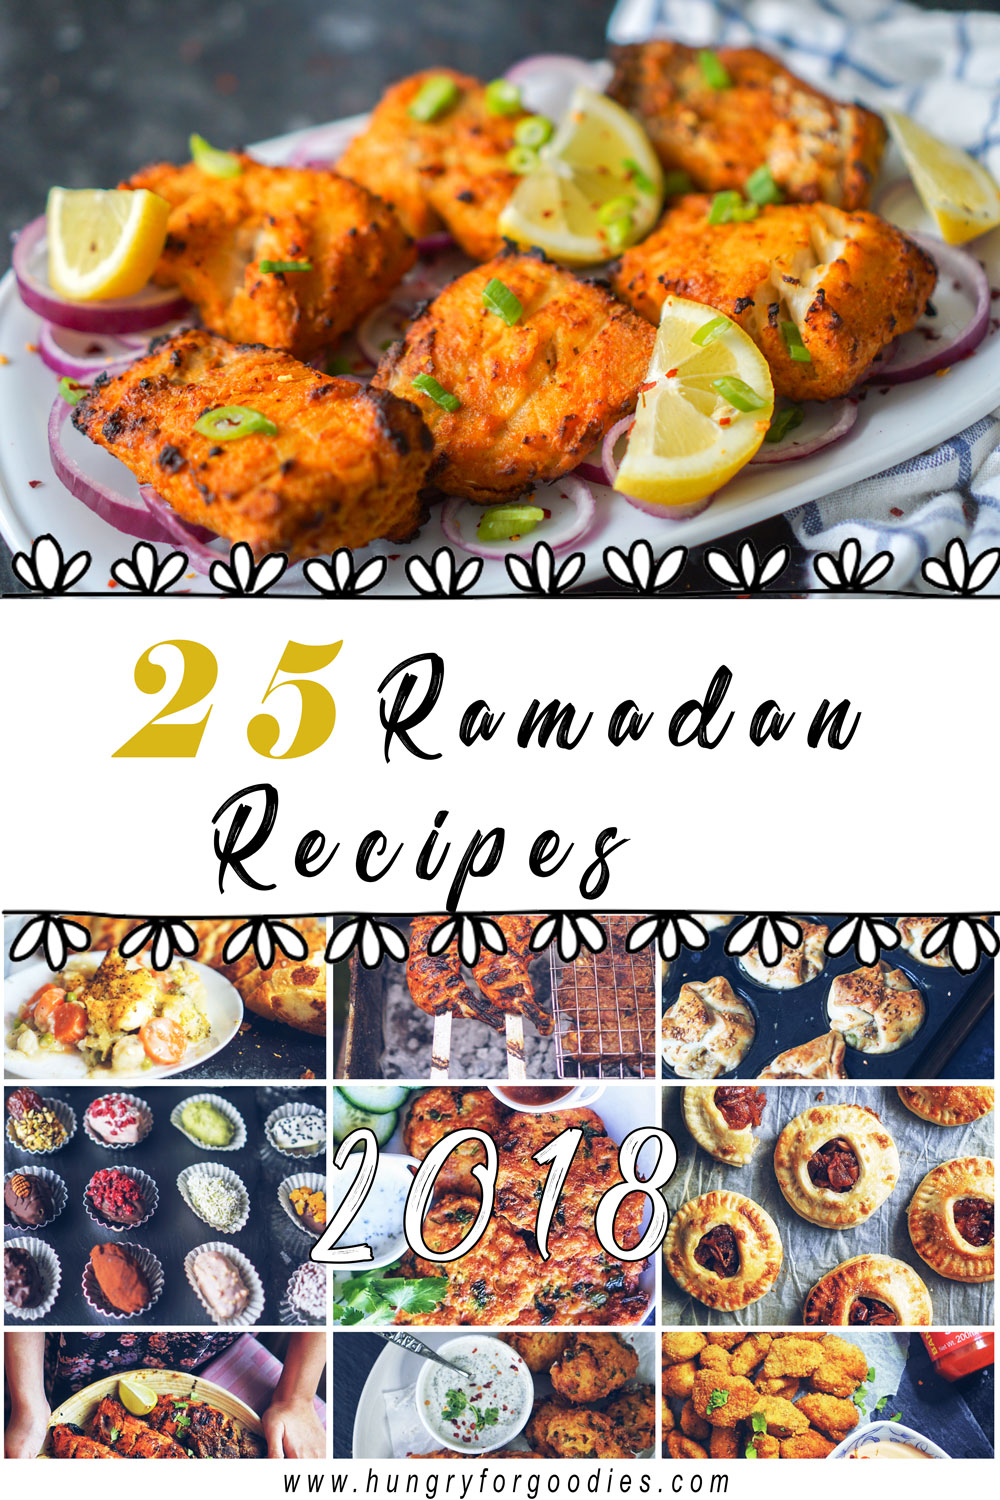 25 New Ramadan Recipes Ideas 2018 - Iftar Recipes 2018 | Hungry for Goodies